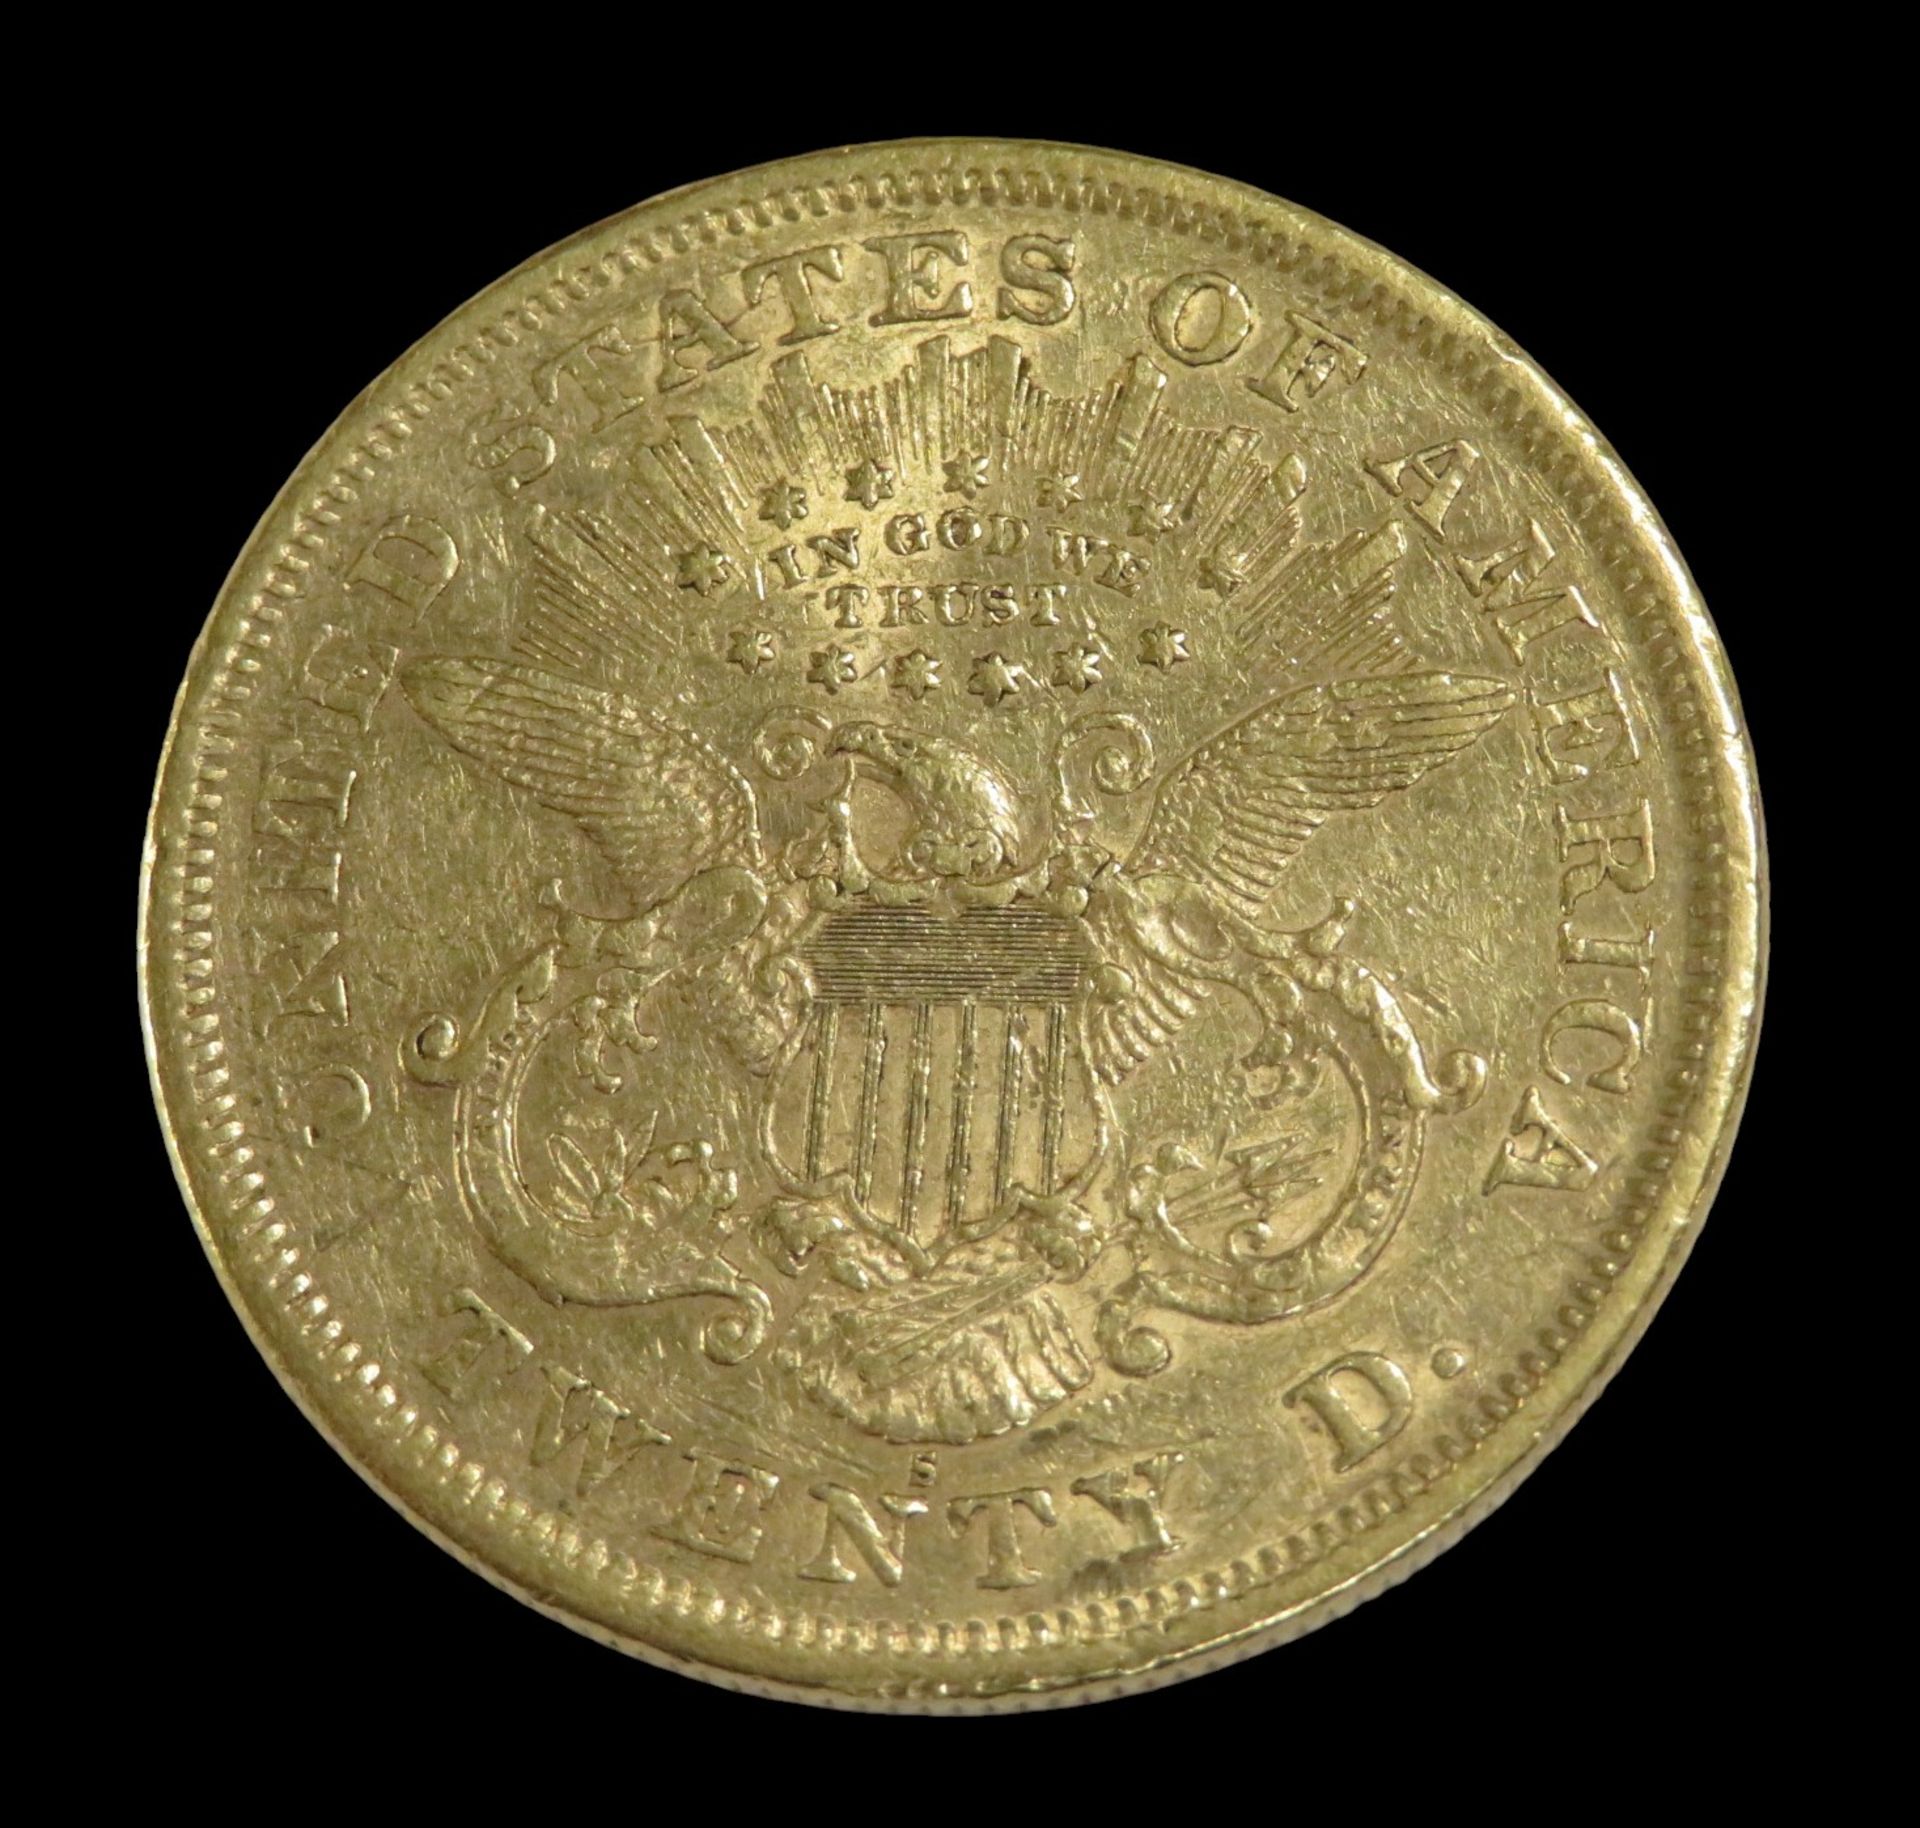 Goldmünze, USA, Liberty Head, 20 Dollars, 1875, Gold 900/000, 33,3 g, d 3,4 cm. - Image 2 of 2